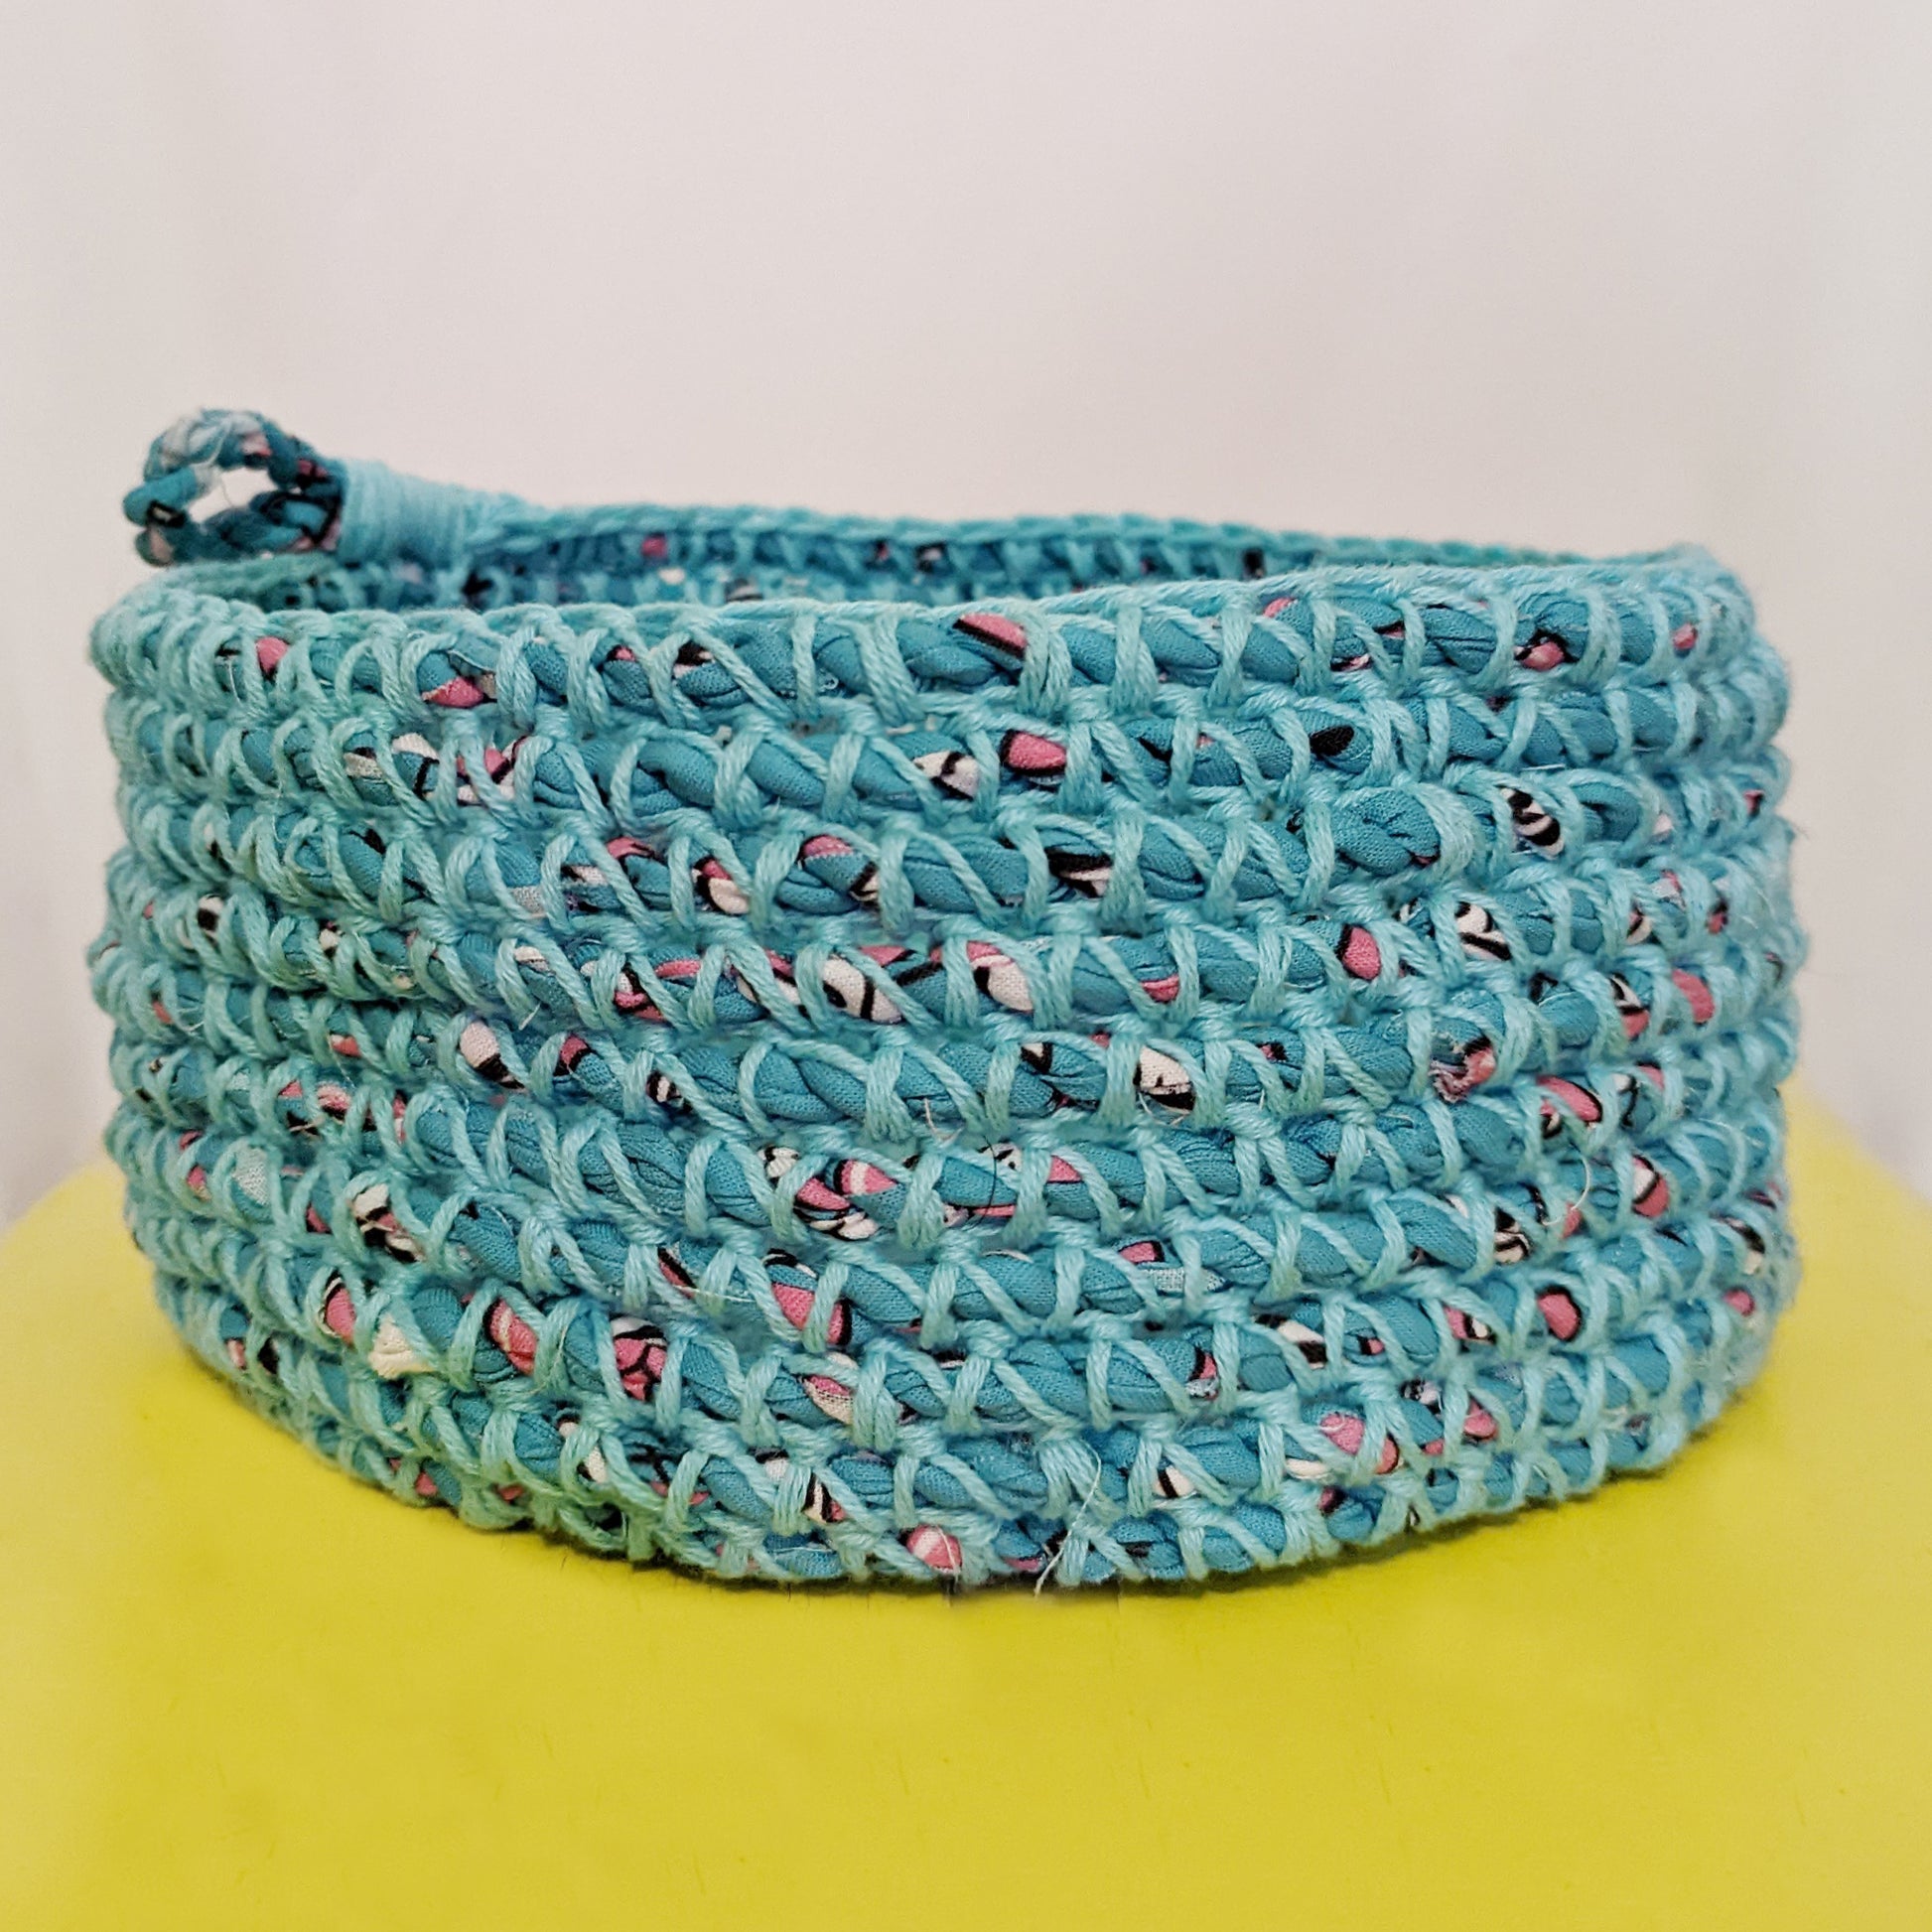 Crochet rope basket